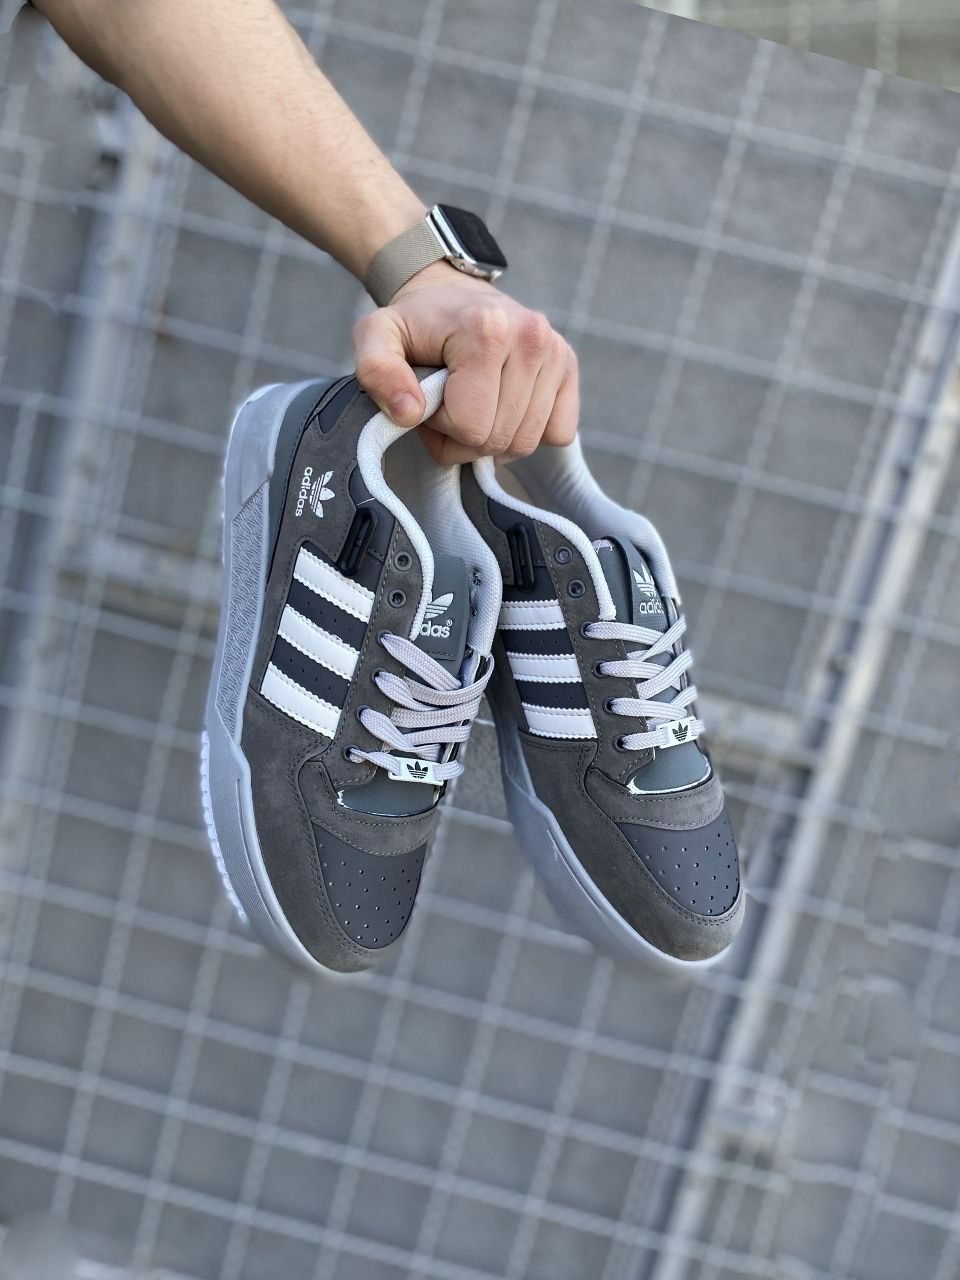 Adidas forum lov grey/мужские кросовки/чоловічі кросівки/Адидас/adidas